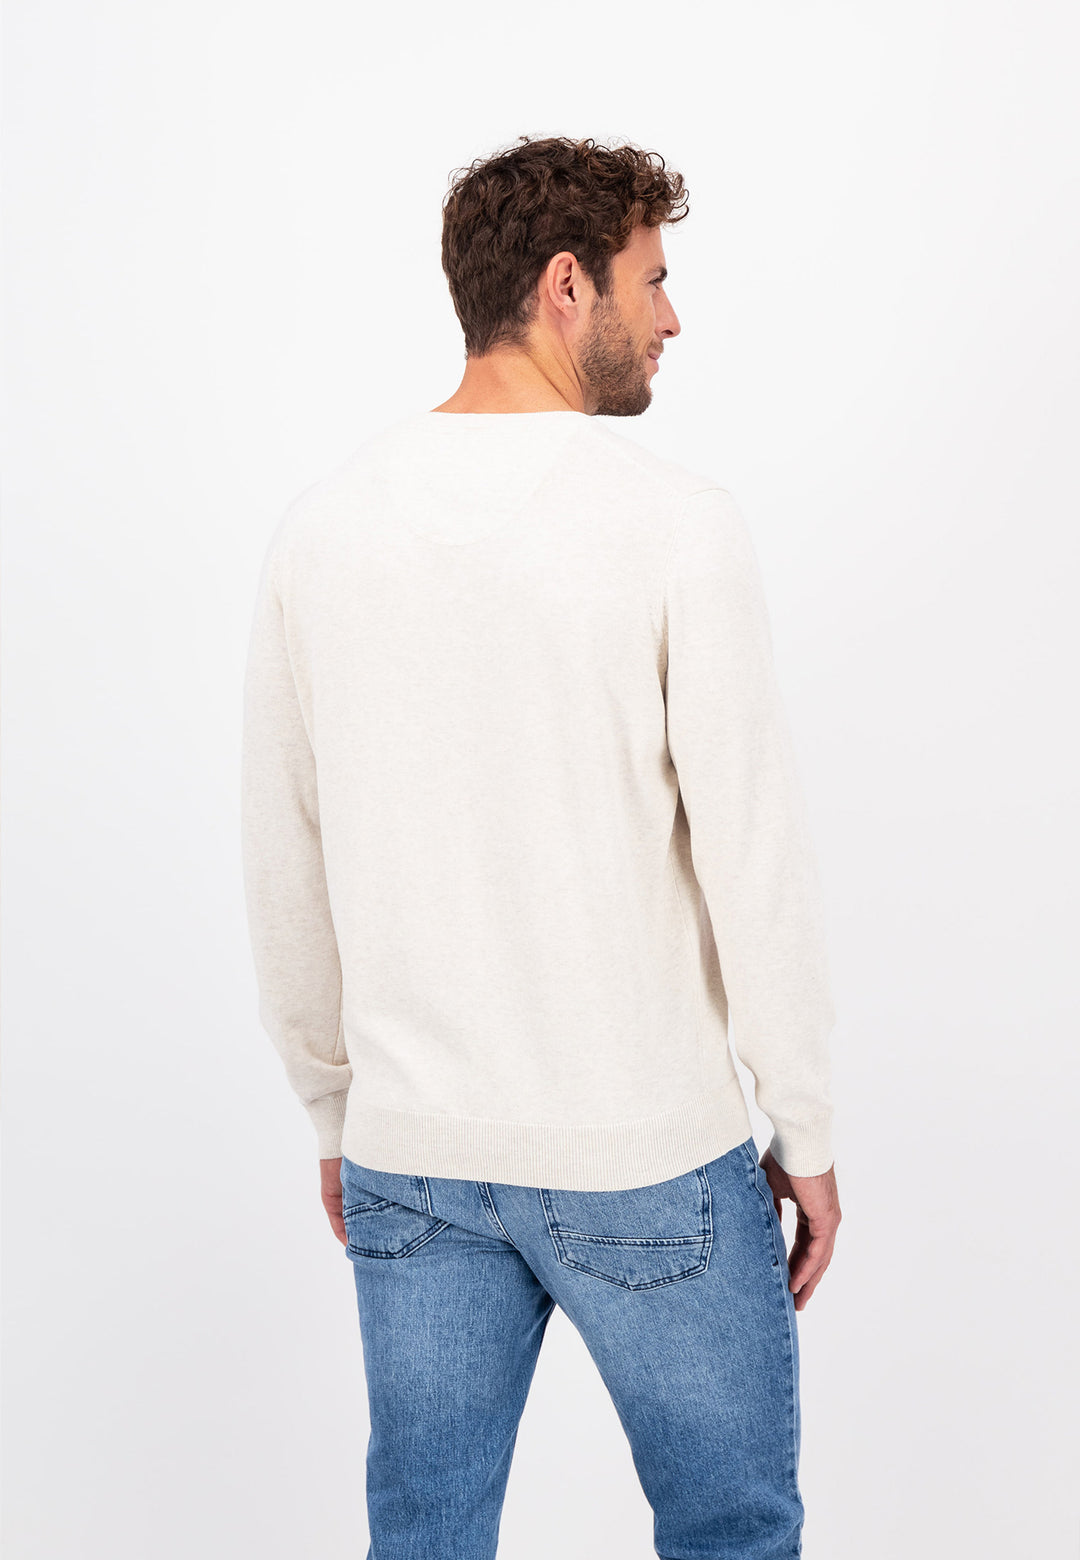 Soft cotton V-neck sweater